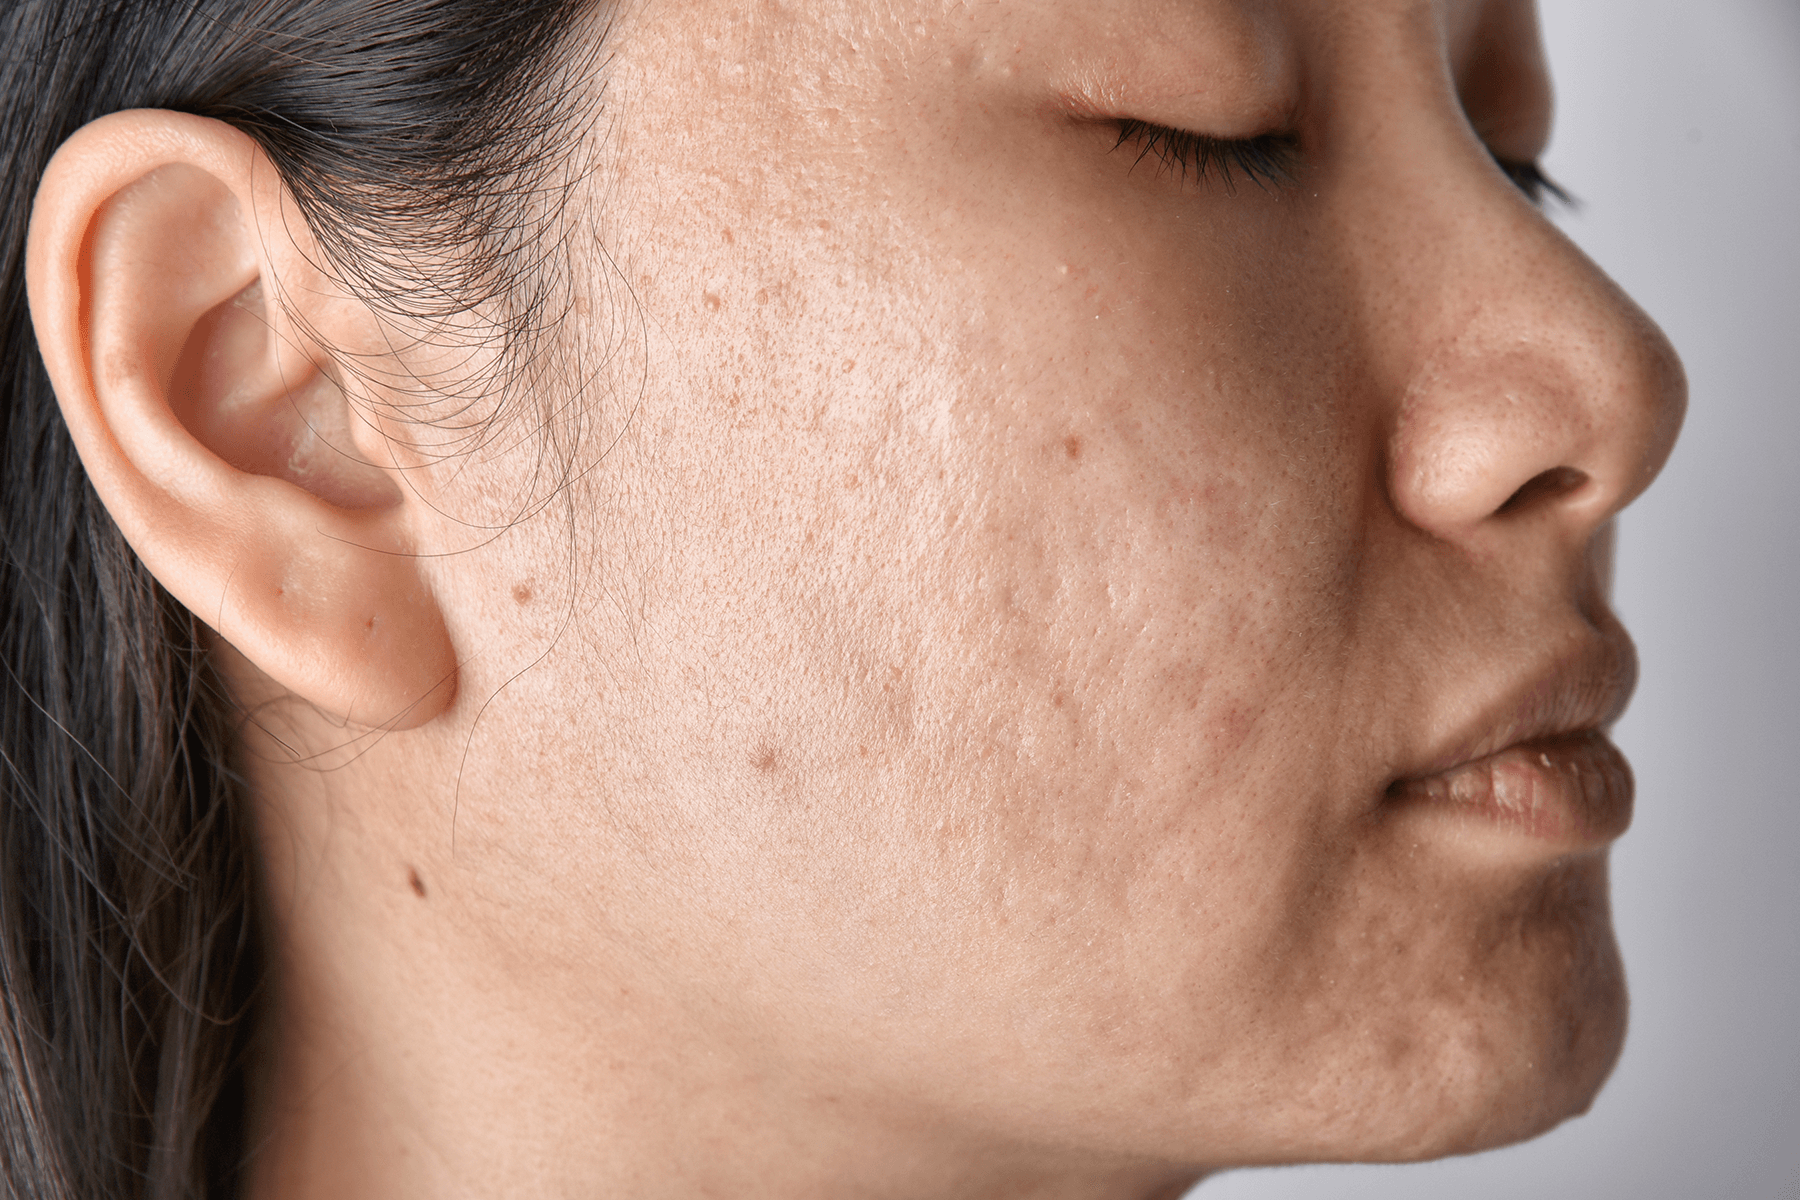 bacne scars treatment